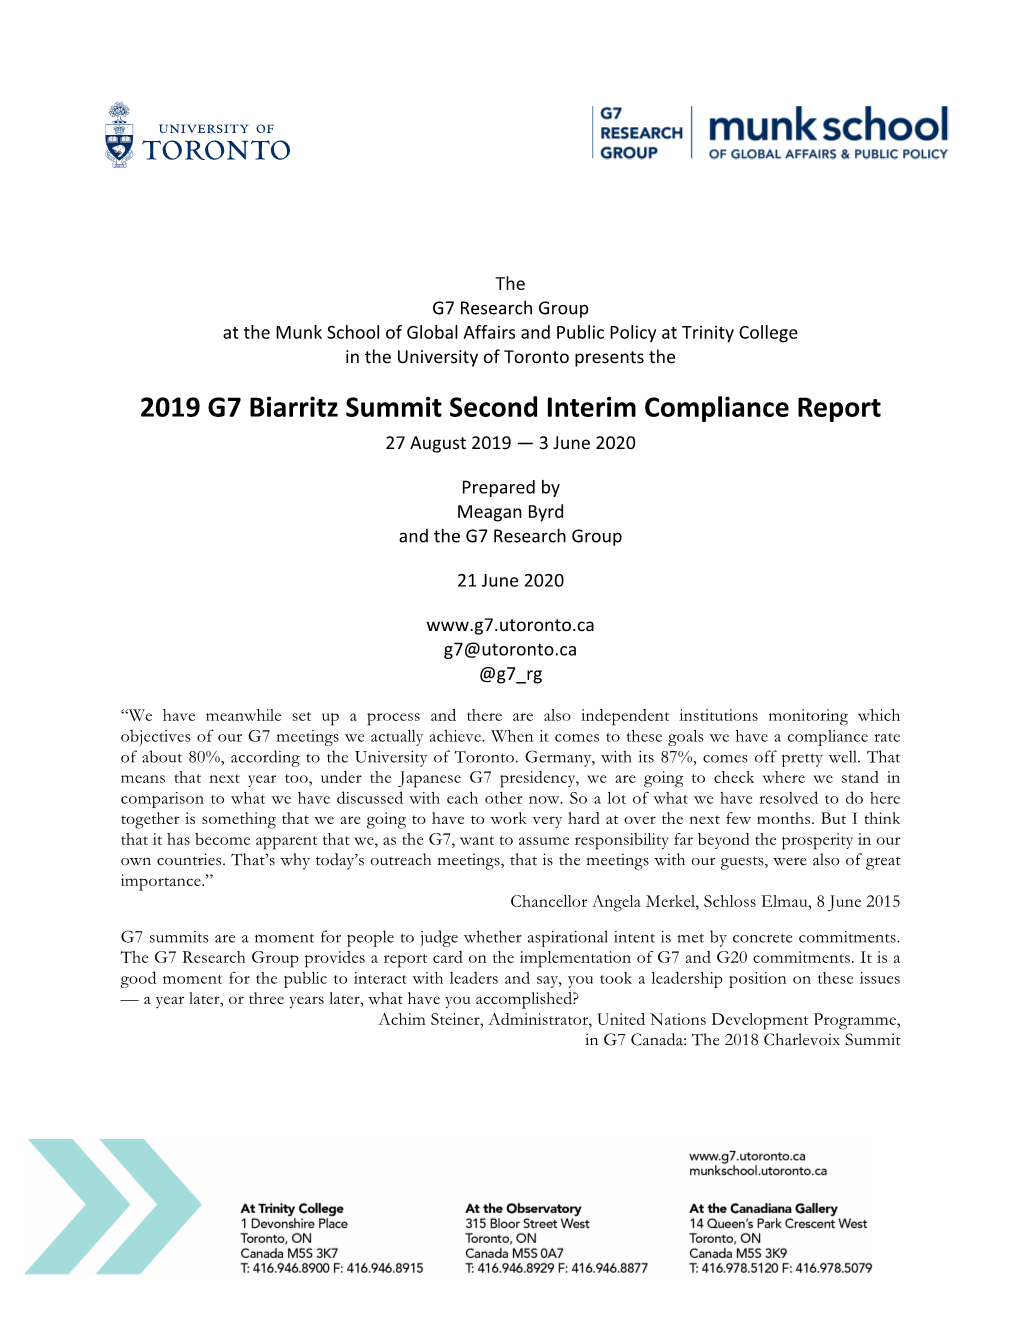 2019 G7 Biarritz Summit Second Interim Compliance Report 27 August 2019 — 3 June 2020